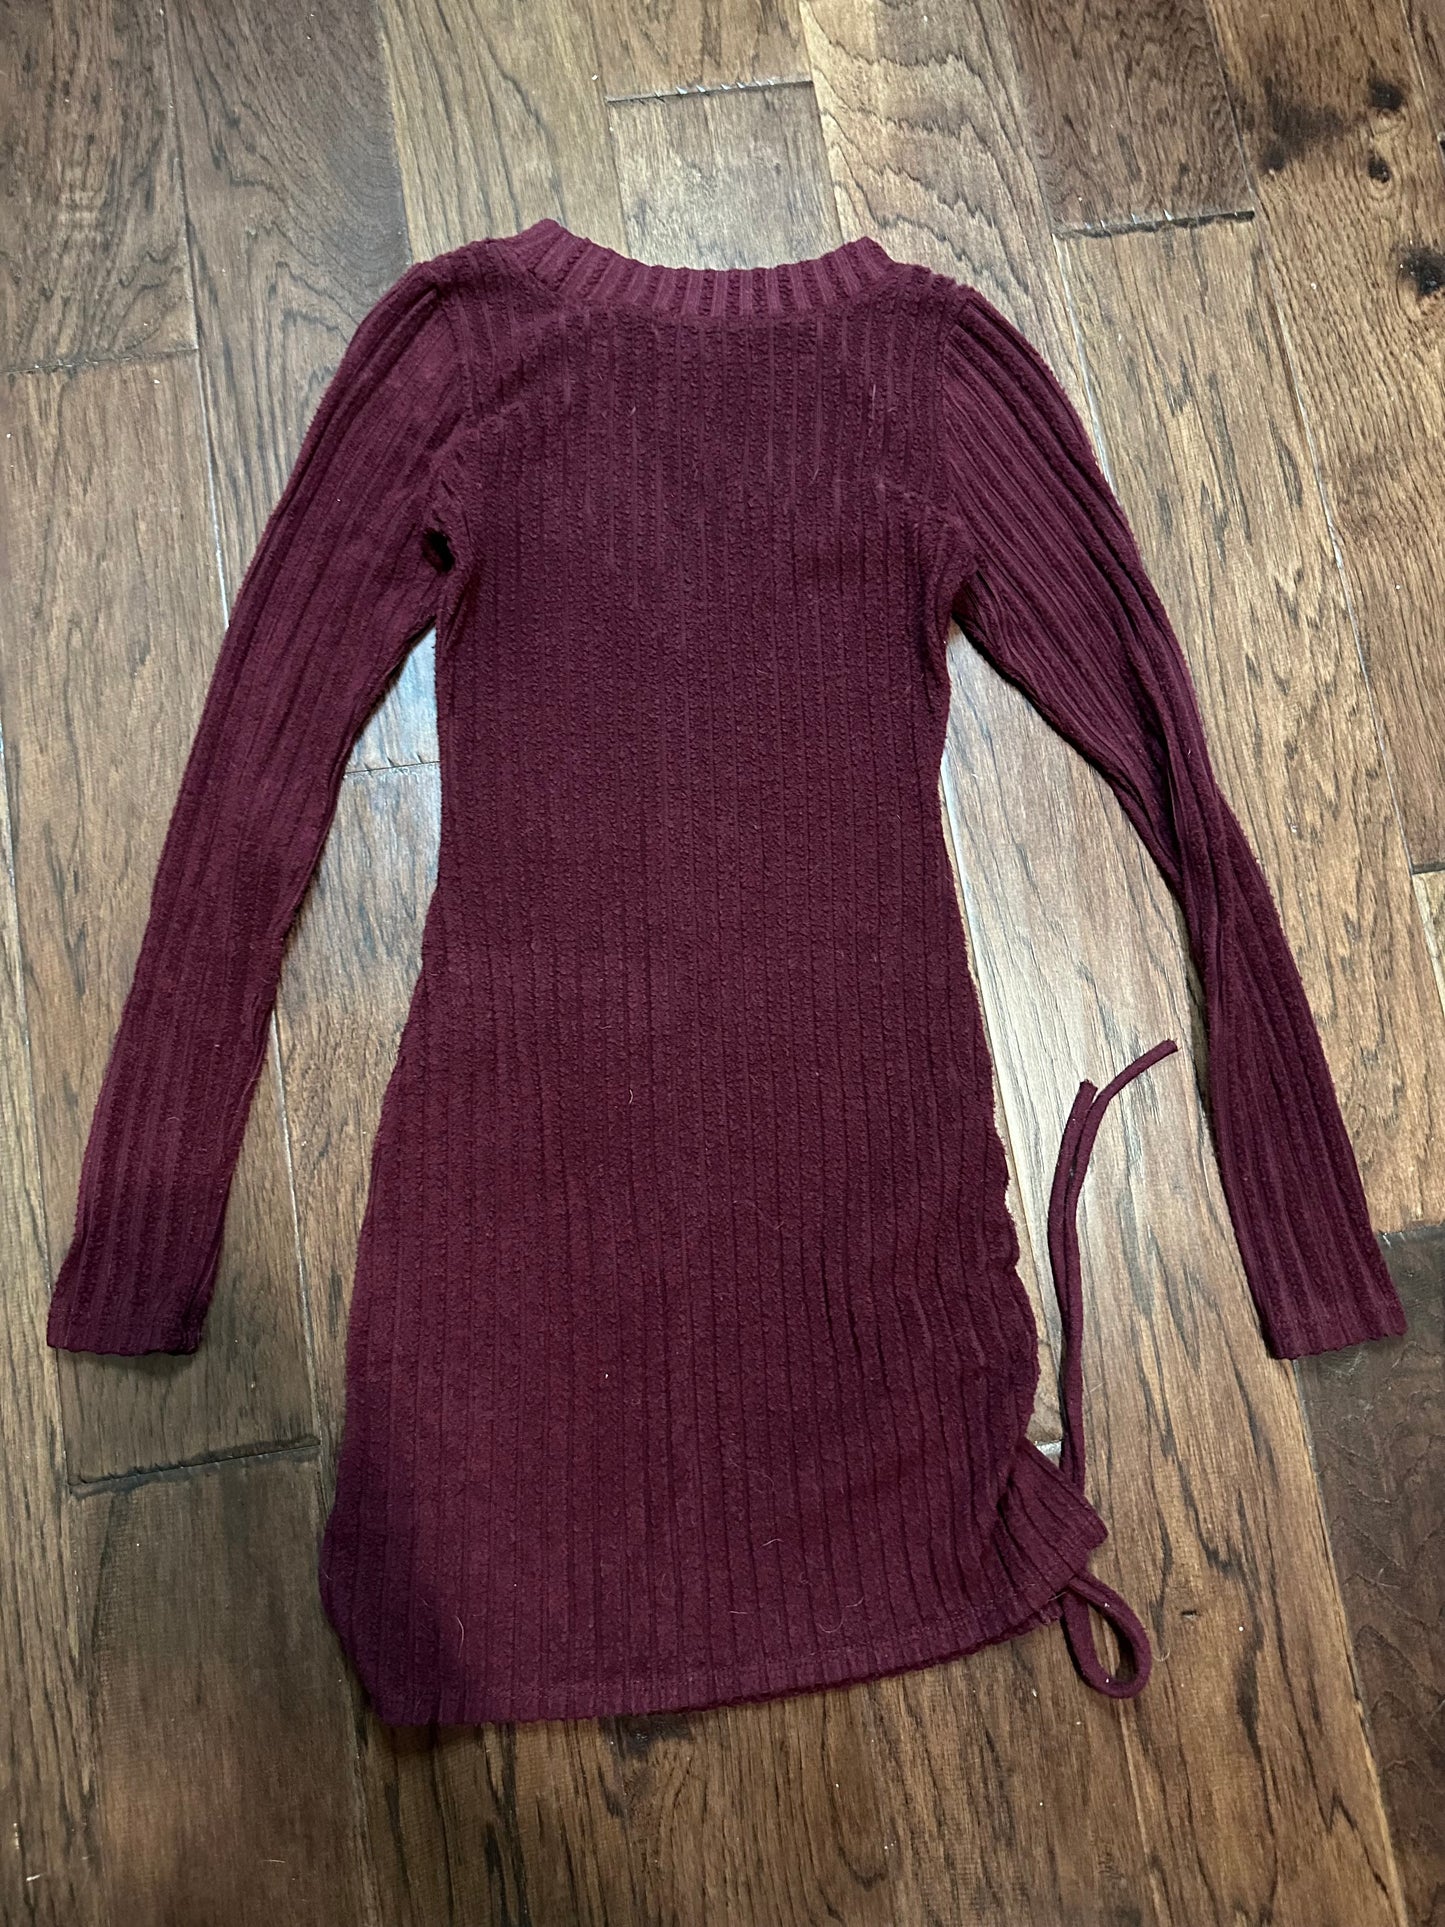 Burgundy long sleeve dress - Small